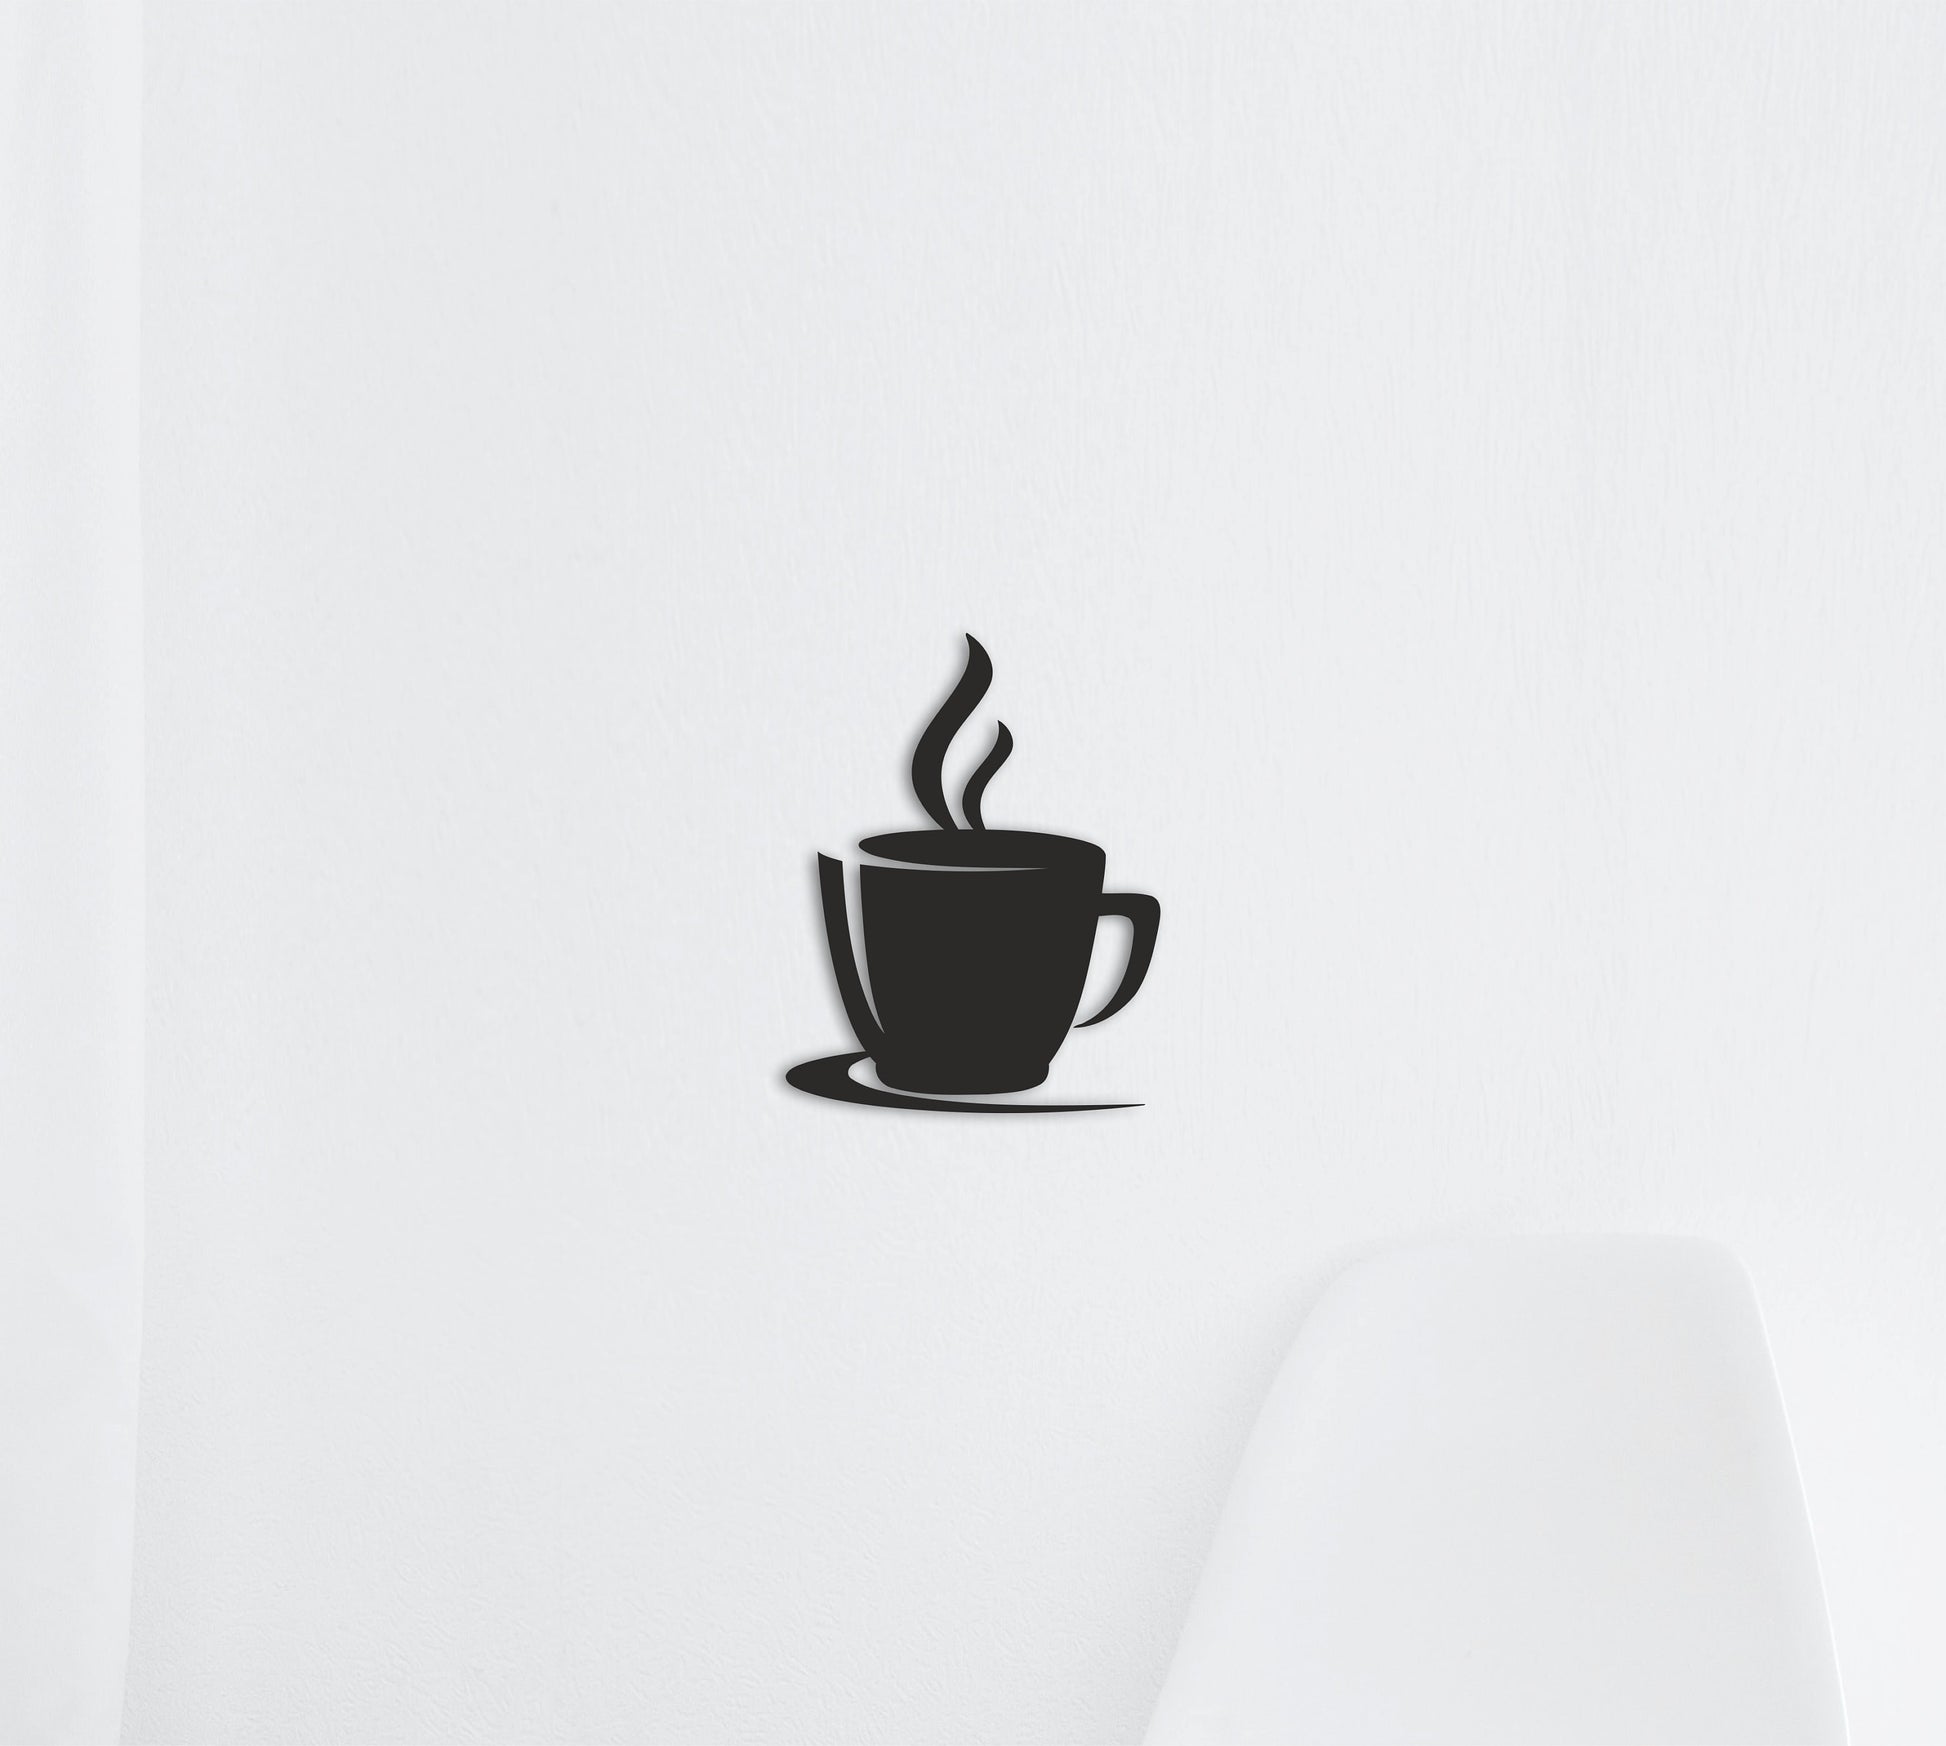 Coffe cup wall art, Wooden decor, Tea cup decorations,Mug sign